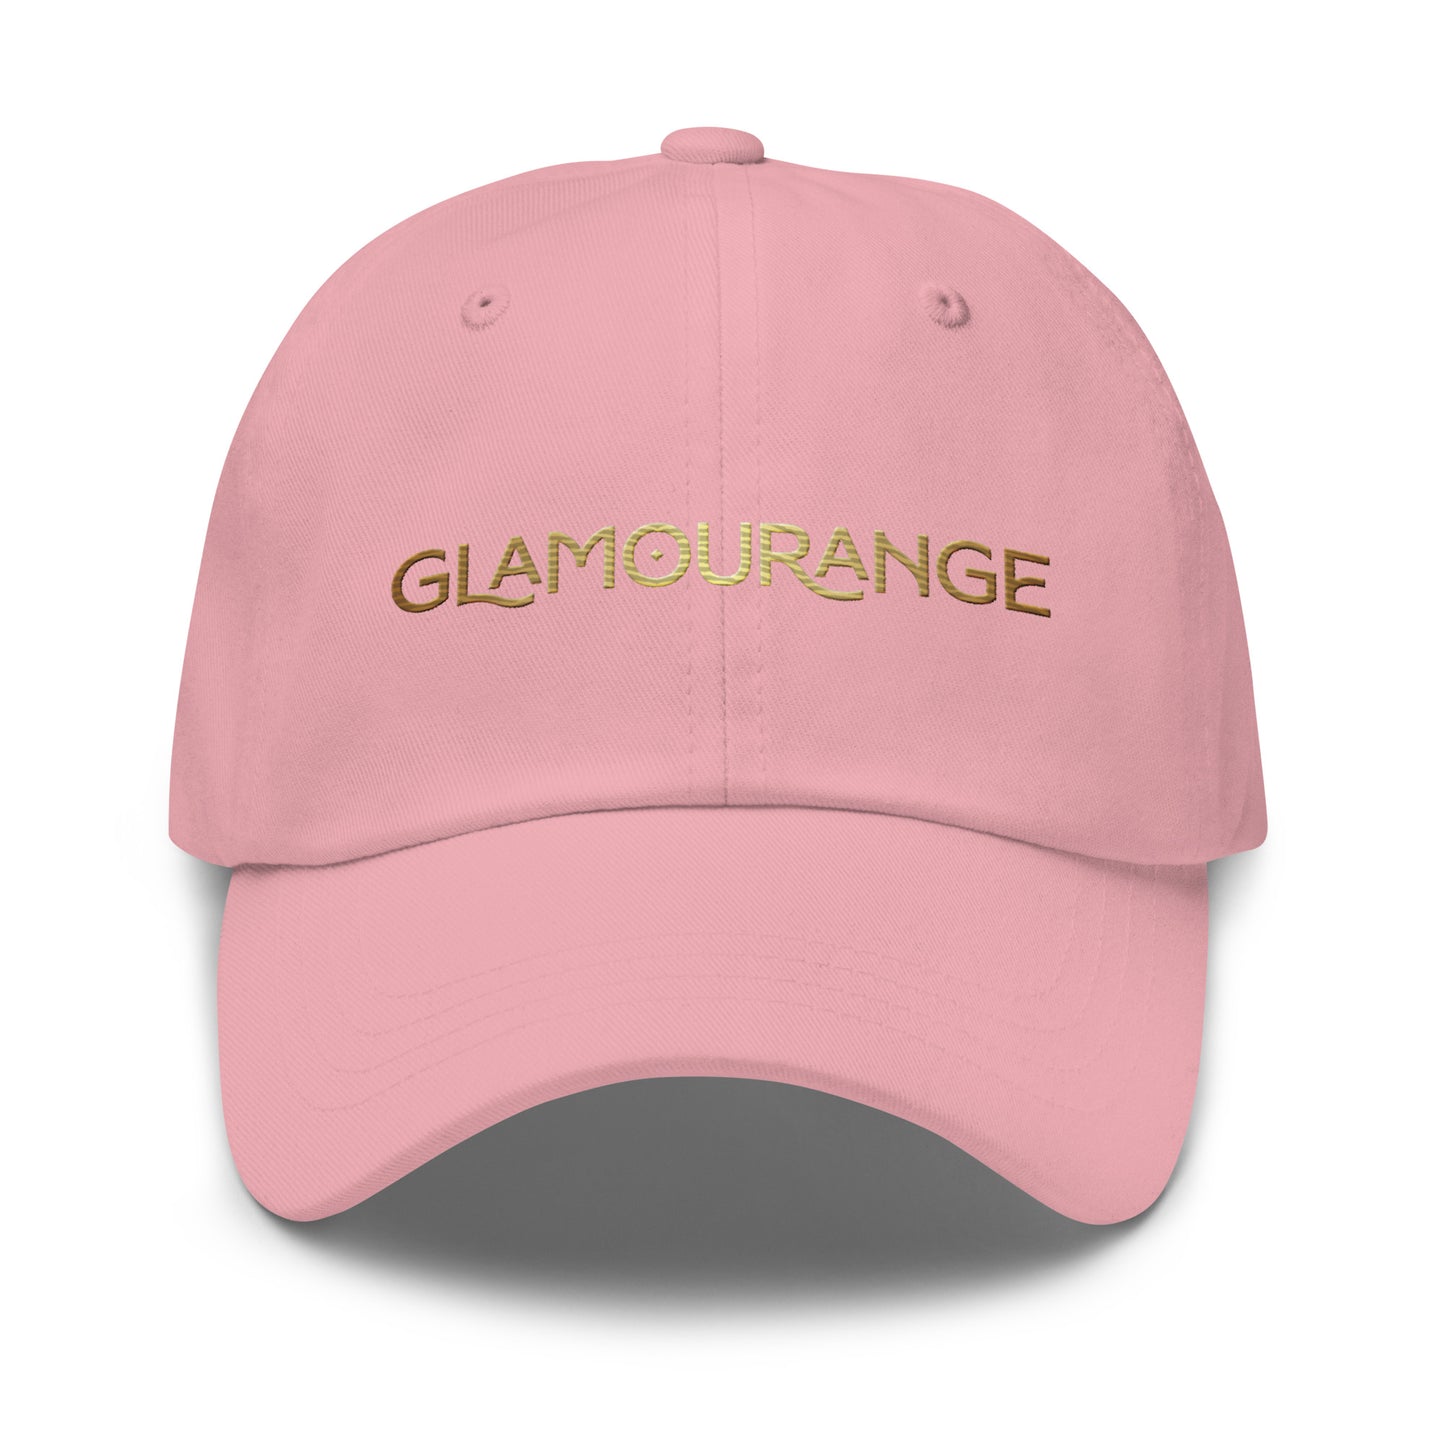 Dad Hat (Glamourange Limited Editions: Large Logo - 001 Model)